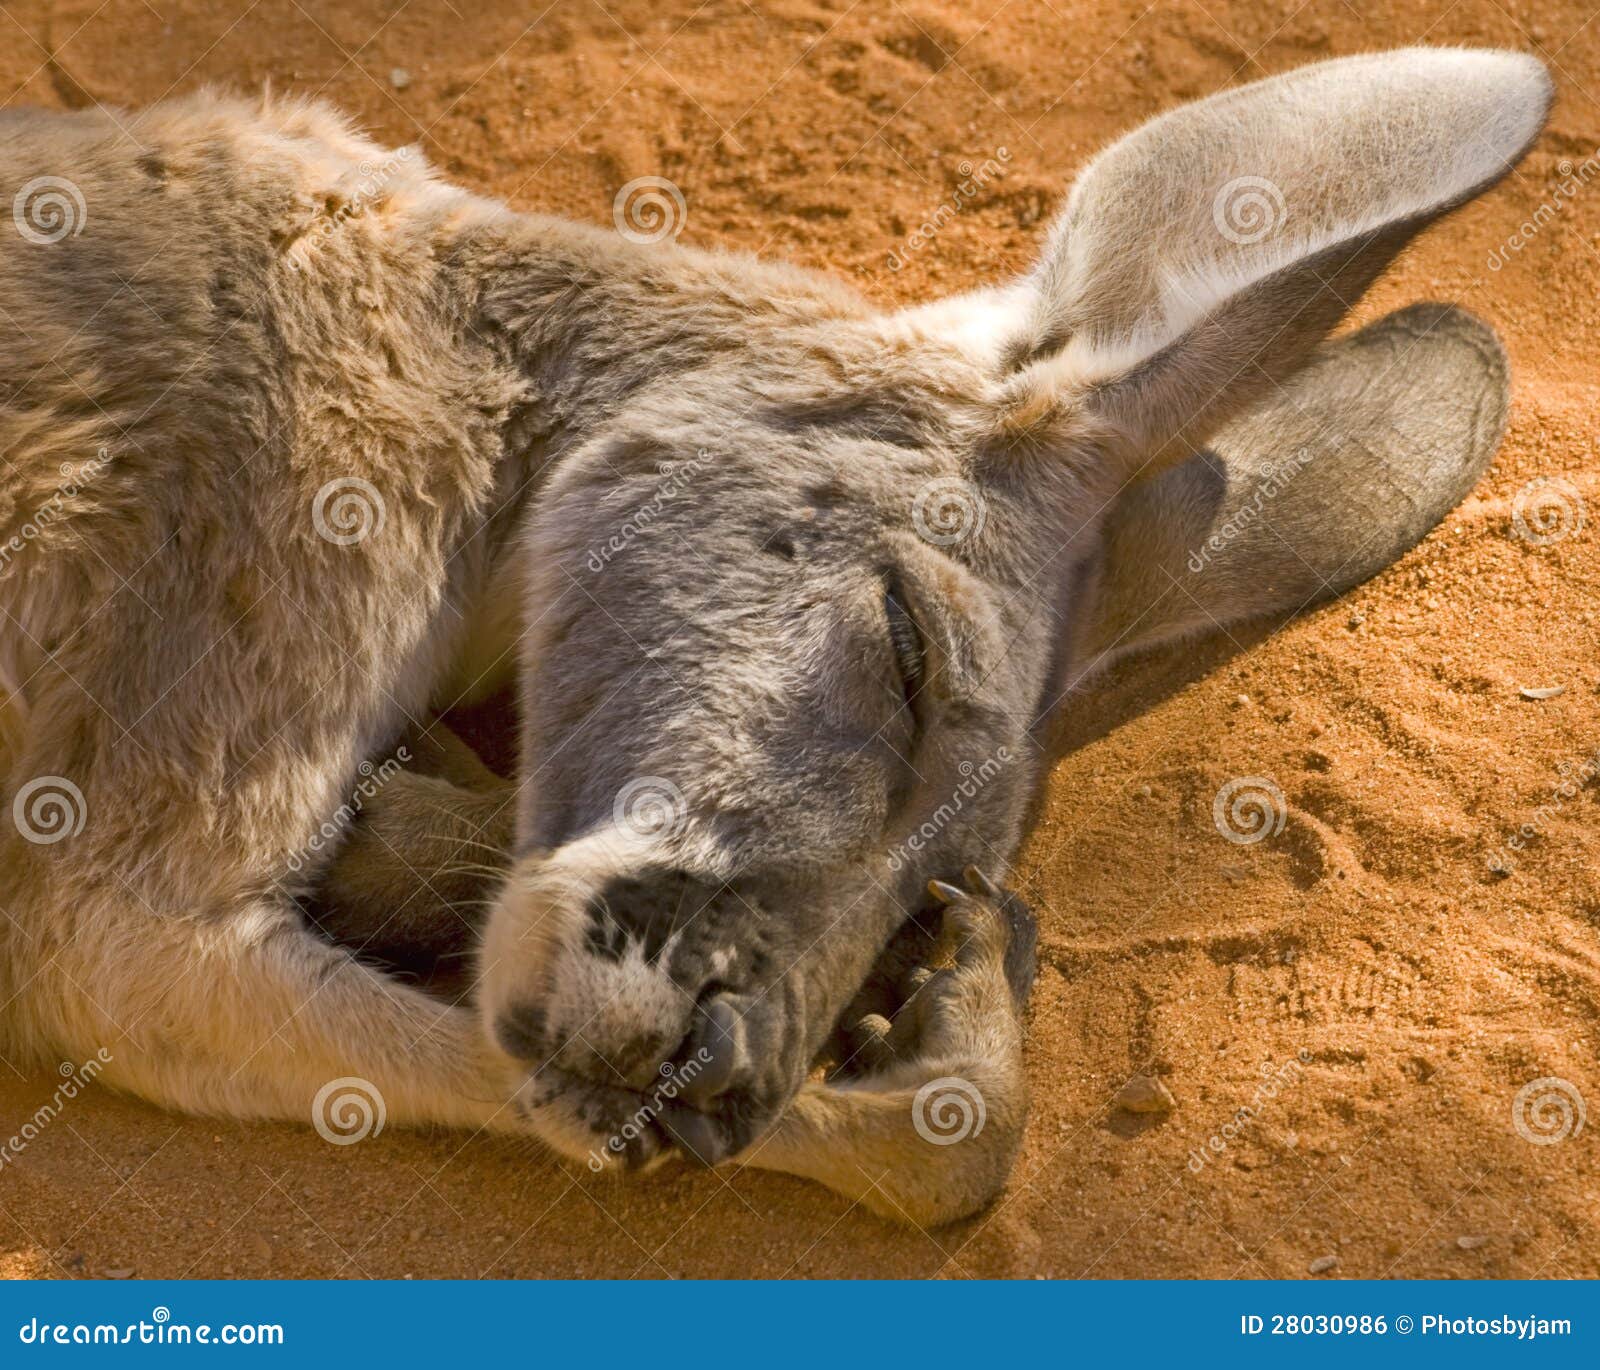 napping kangaroo